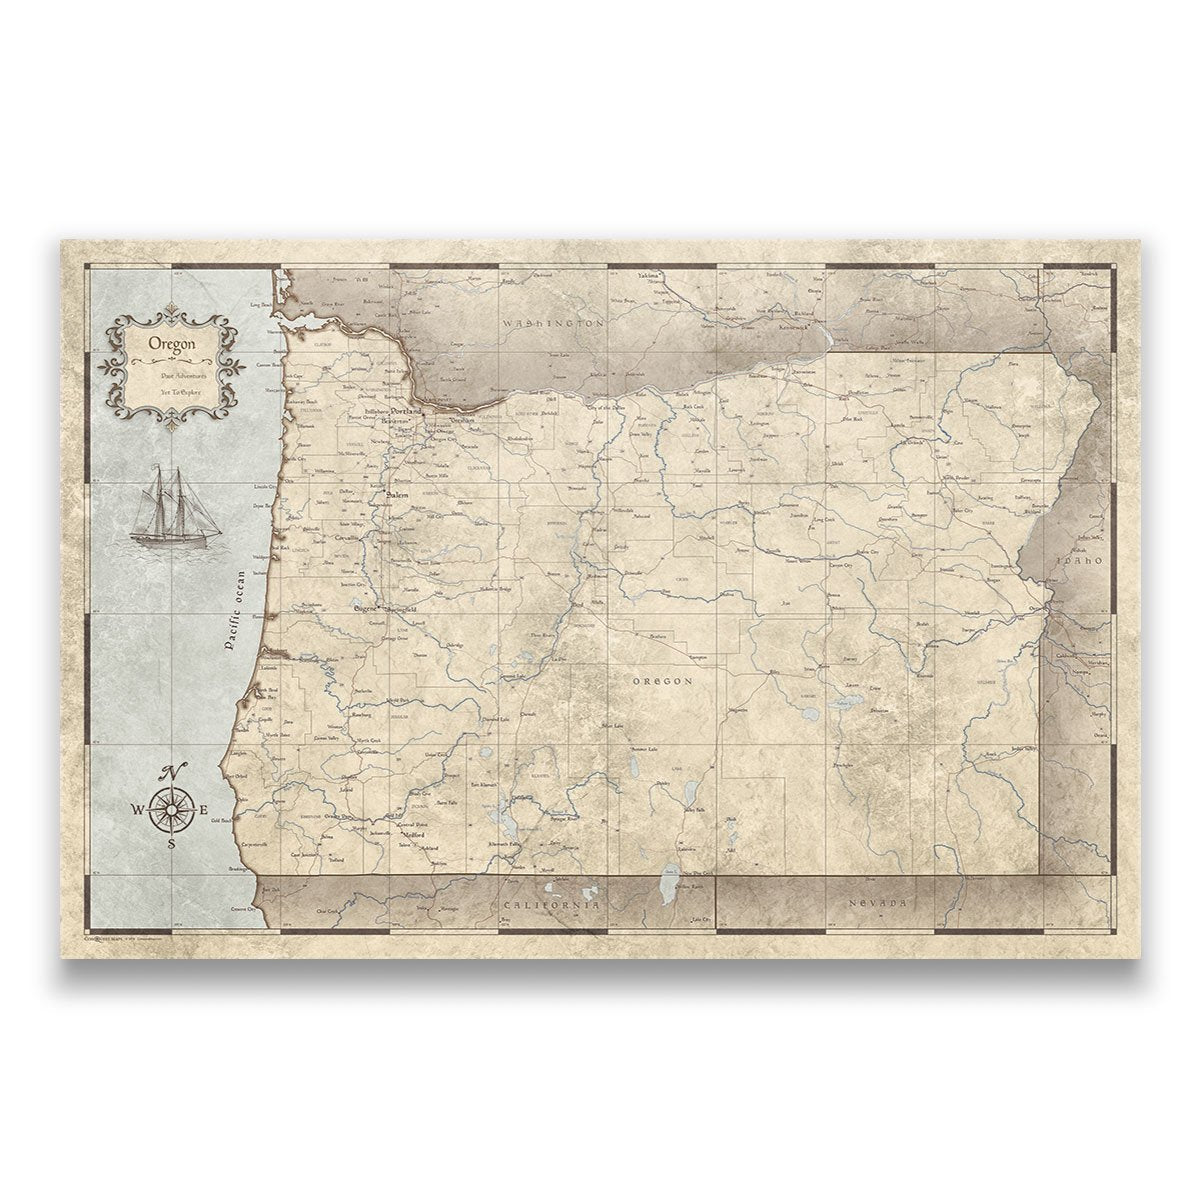 Oregon Poster Maps